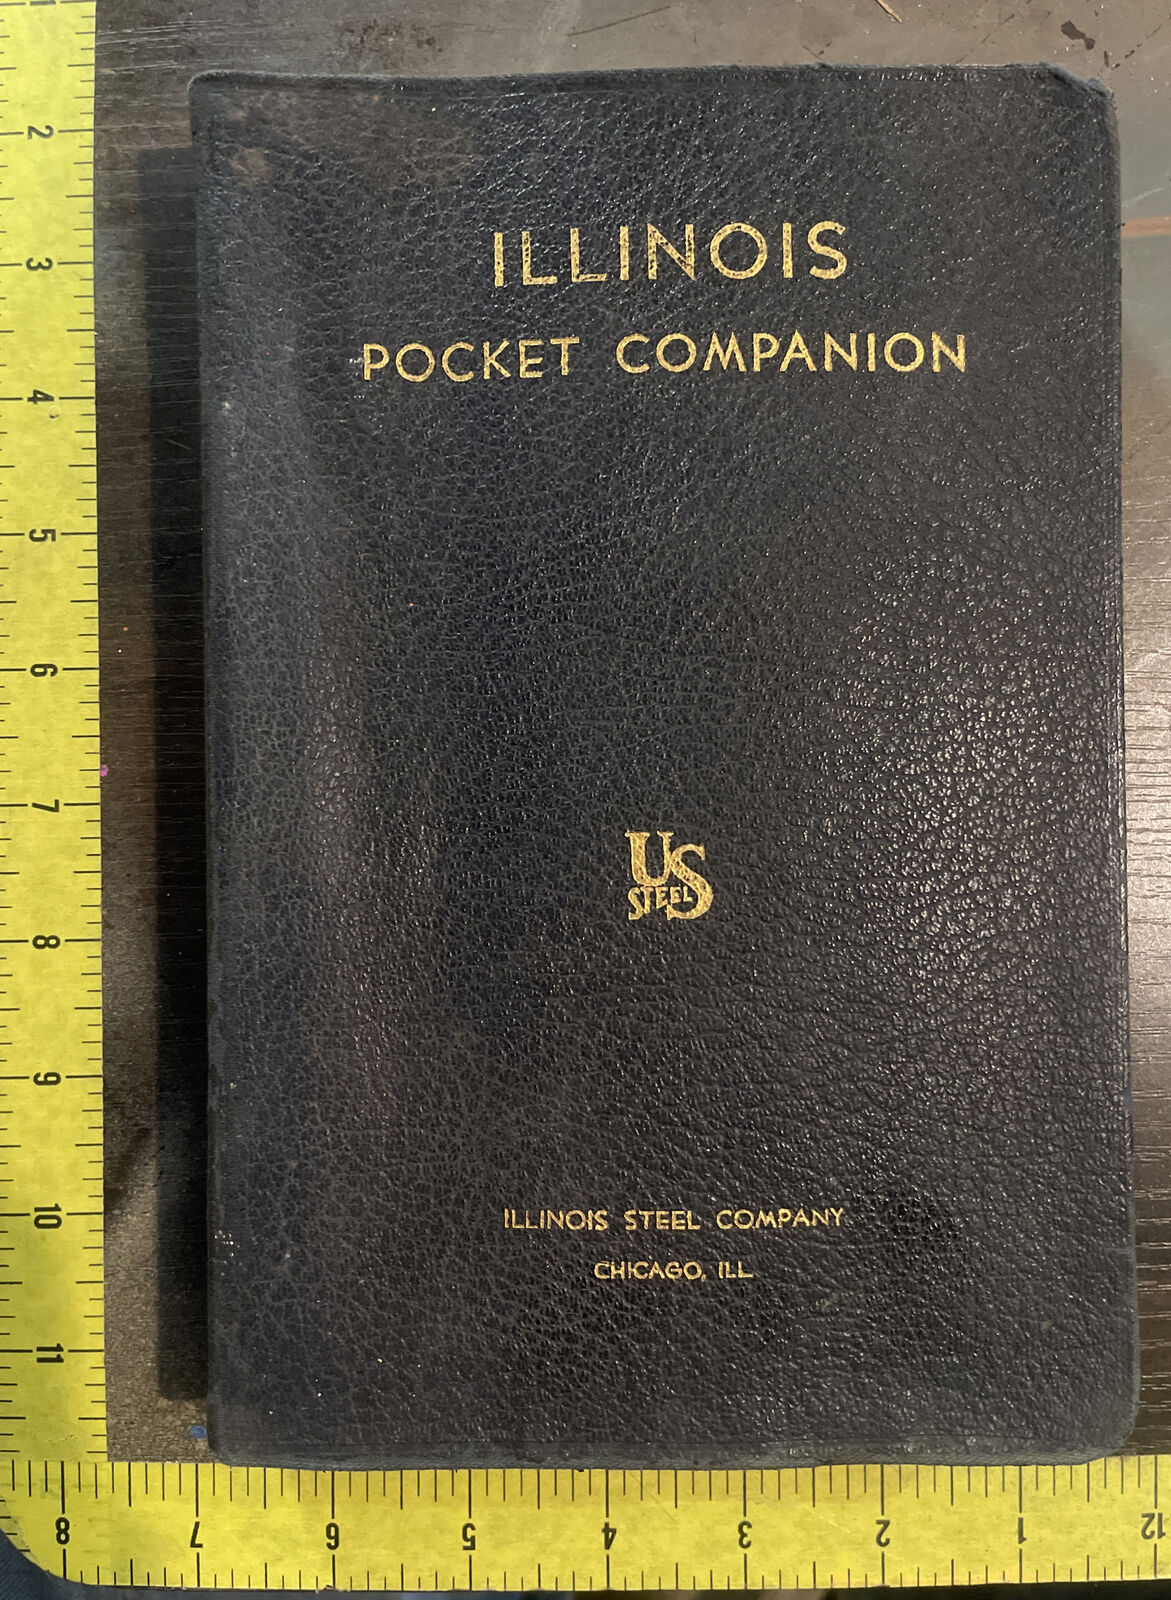 1934 Illinois Steel Company Pocket Companion Chicago,Illinois US Steel Book